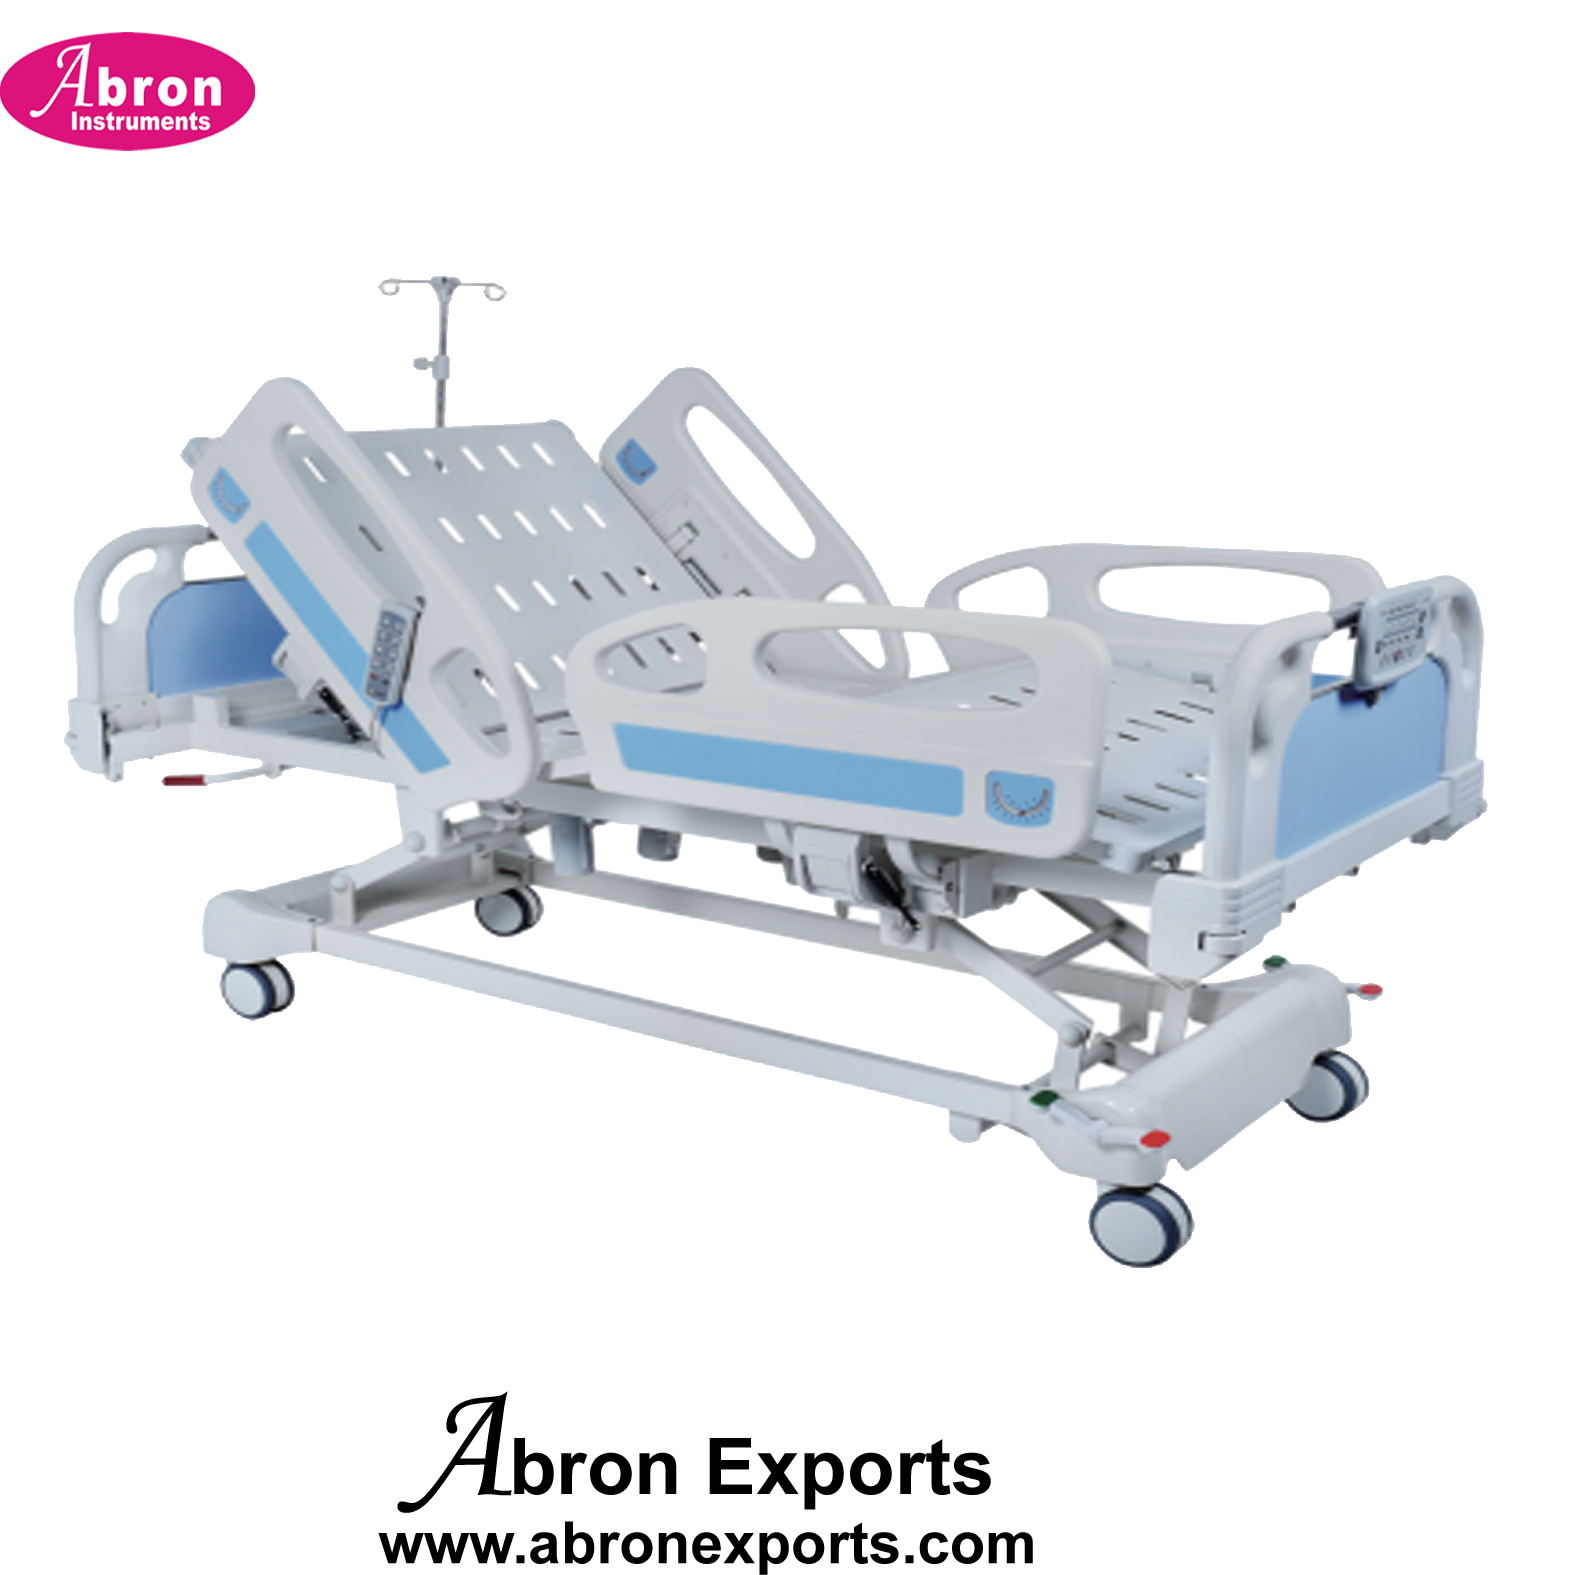 Patient Stretcher Electric ICU Bed 7 Function 4 Wheels Locking CPR Urine Bag IV Holder ABS Hospital Furniture Abron ABM-2261SE7F 